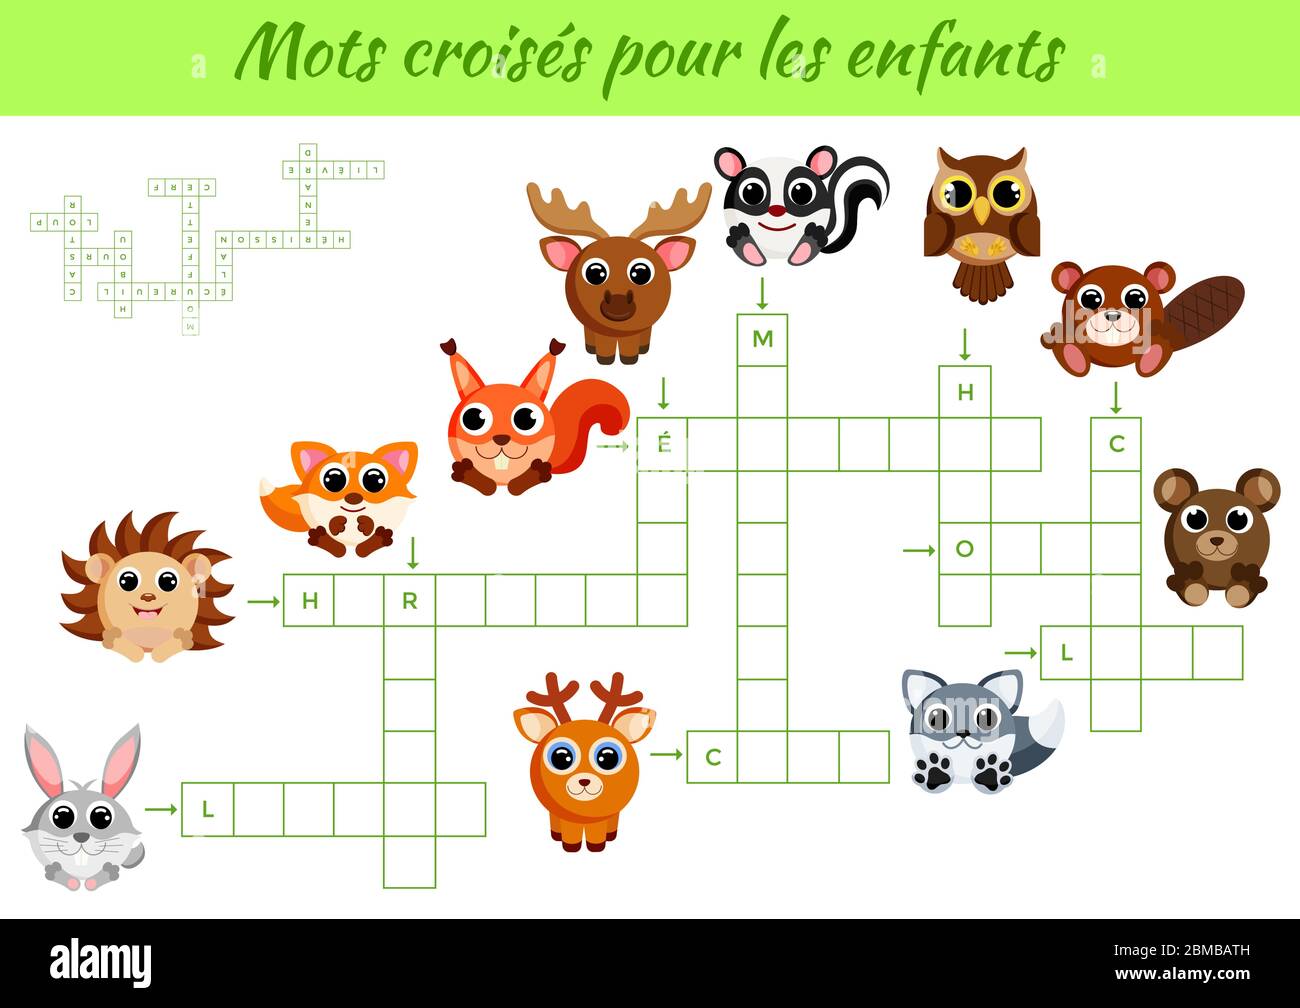 Mots Croises Pour Les Enfants Crossword For Kids Activity Worksheet Colorful Printable Version Educational Game For Study French Words Stock Vector Image Art Alamy